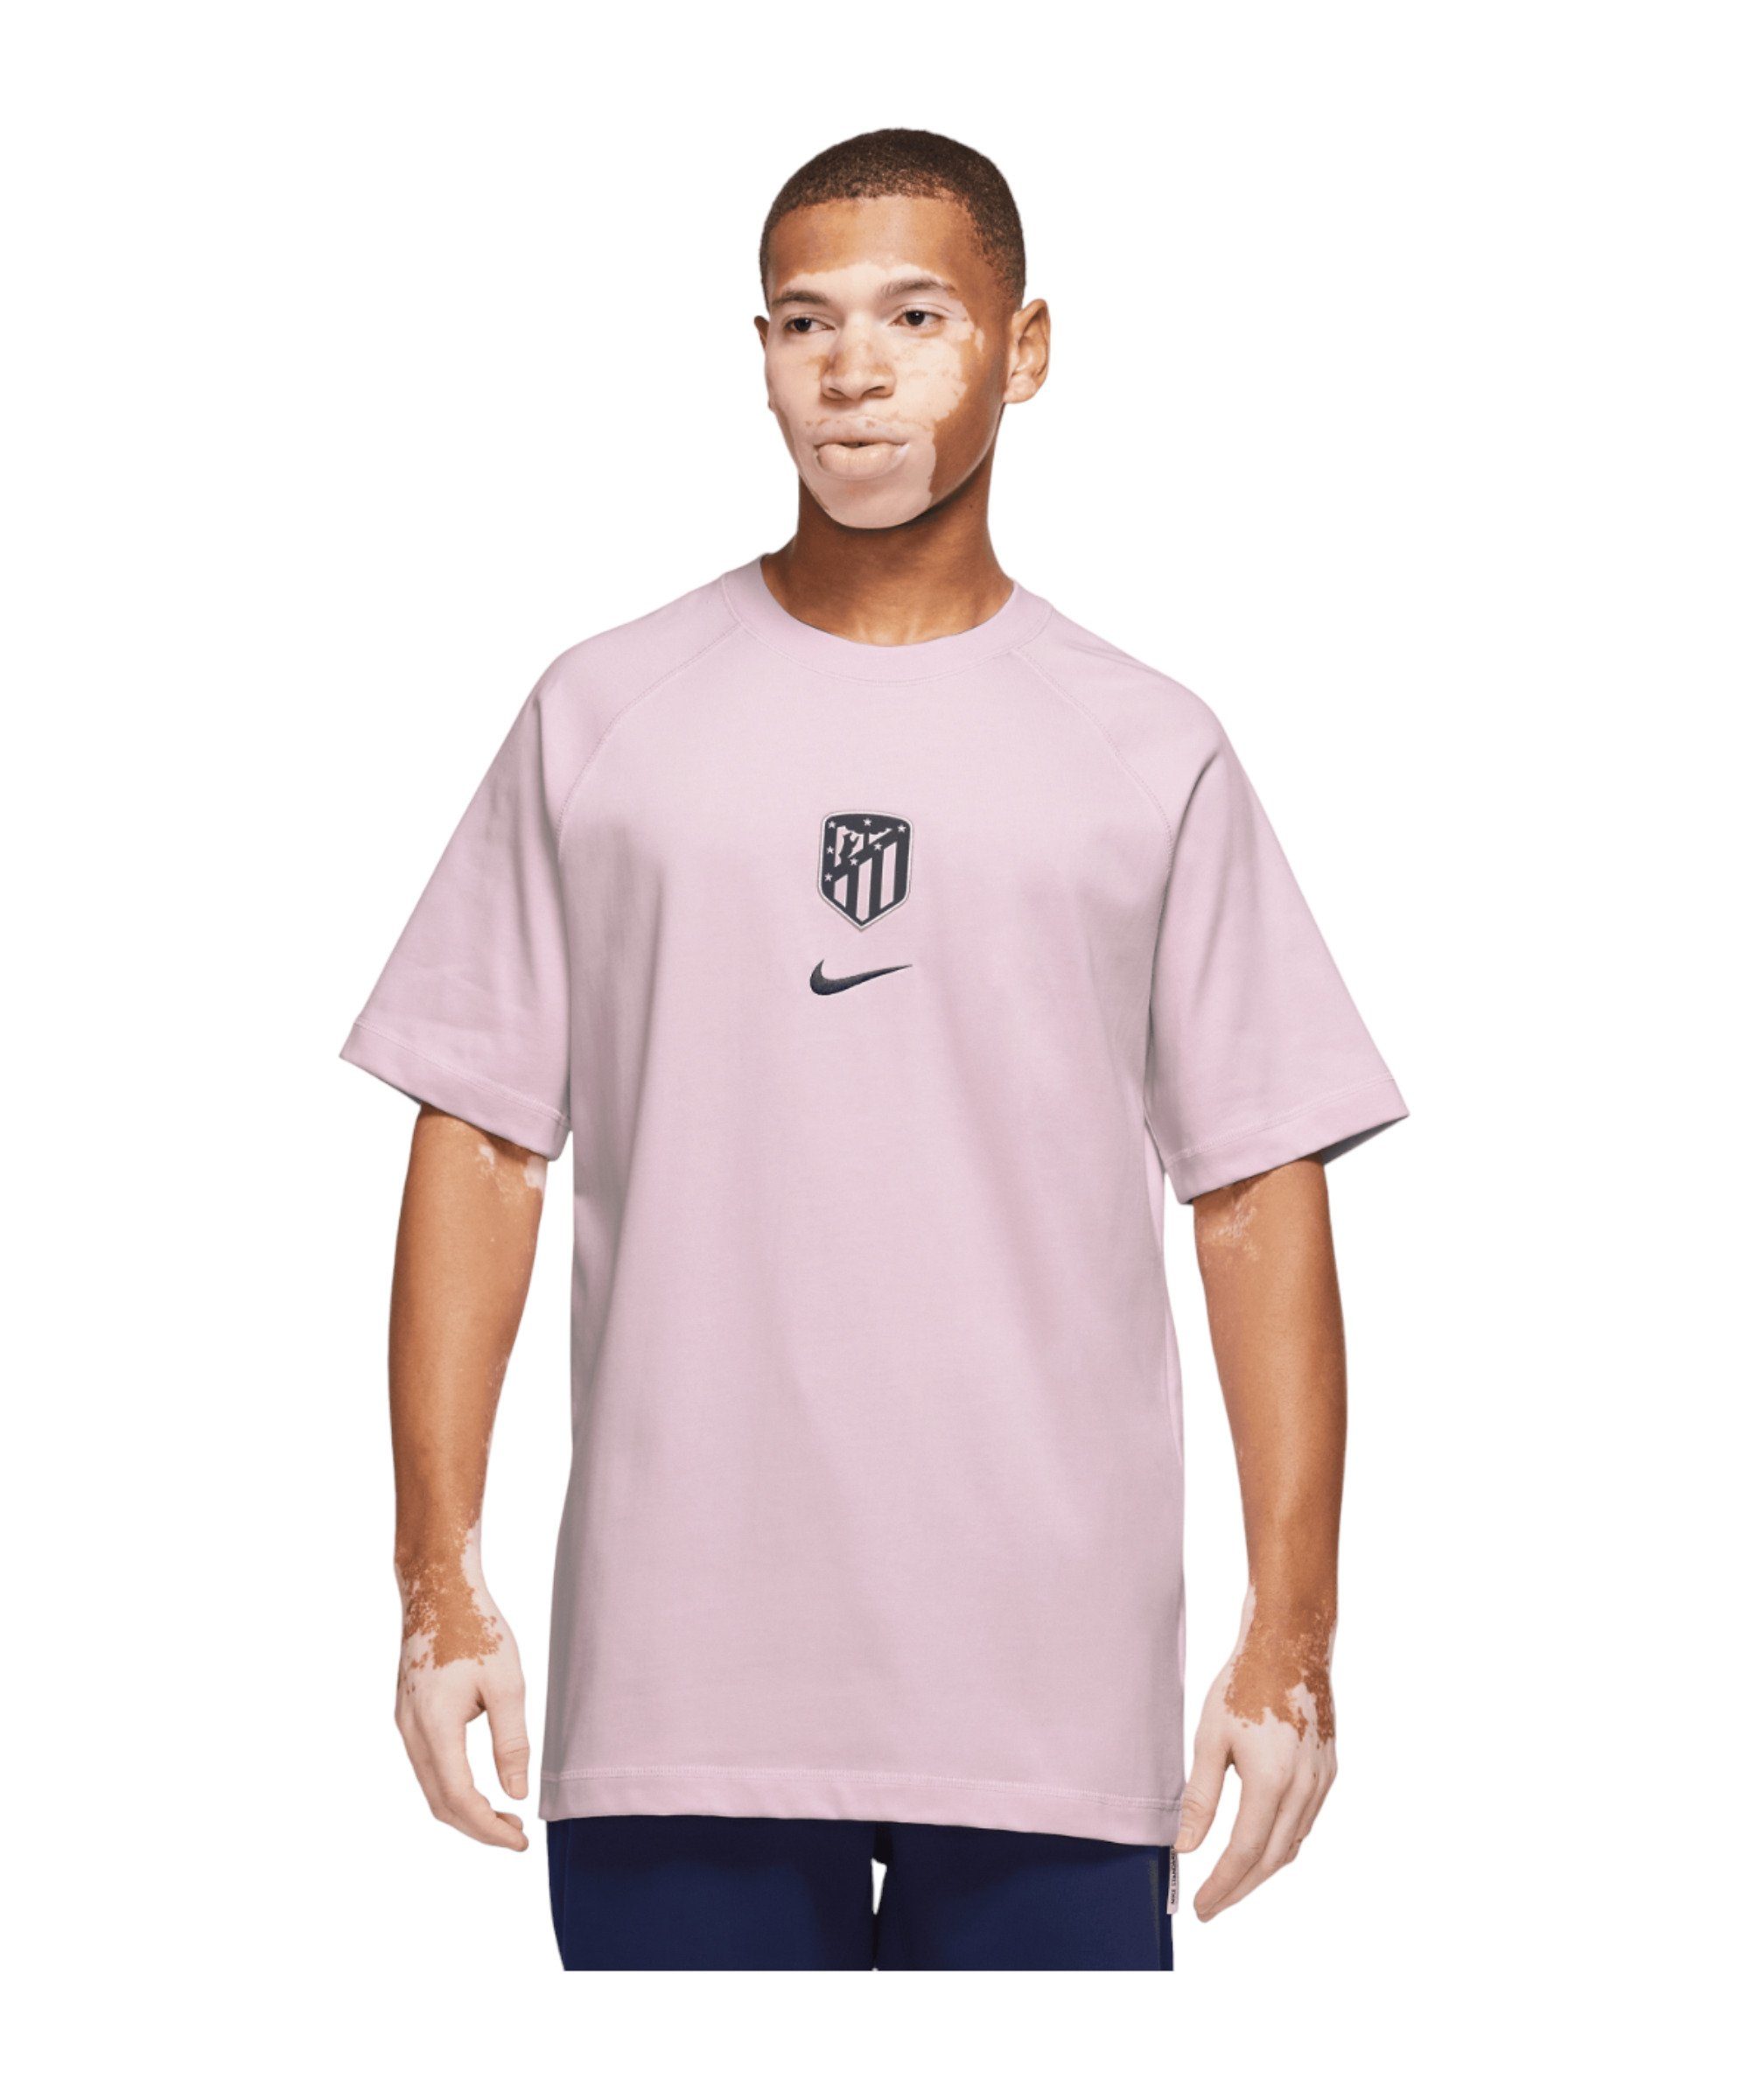 Rosa Nike Damen T-Shirts online kaufen | OTTO